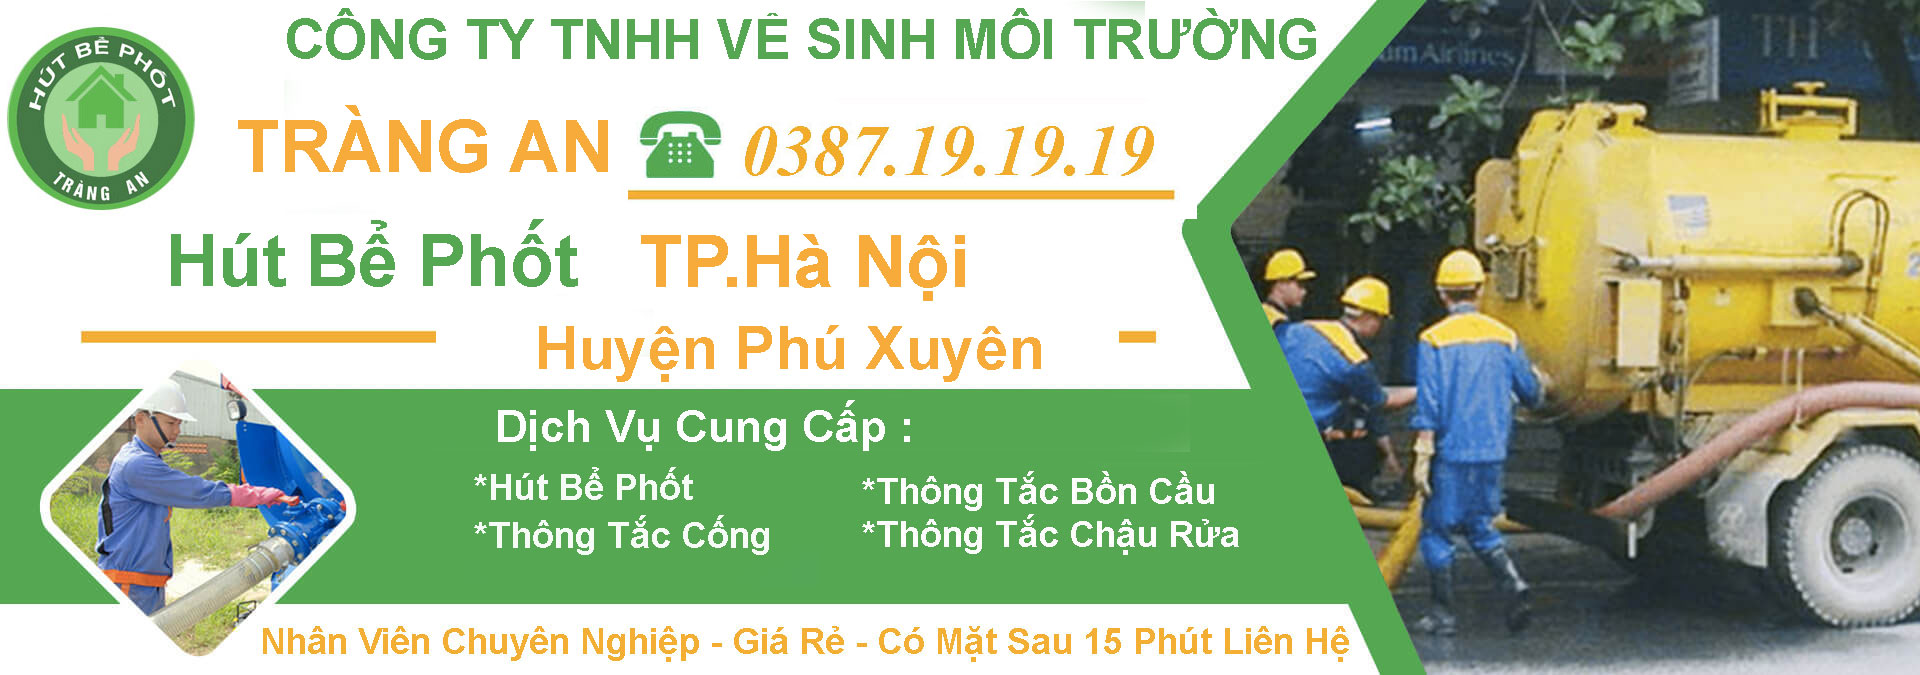 Hut Be Phot Ha Noi Phu Xuyen